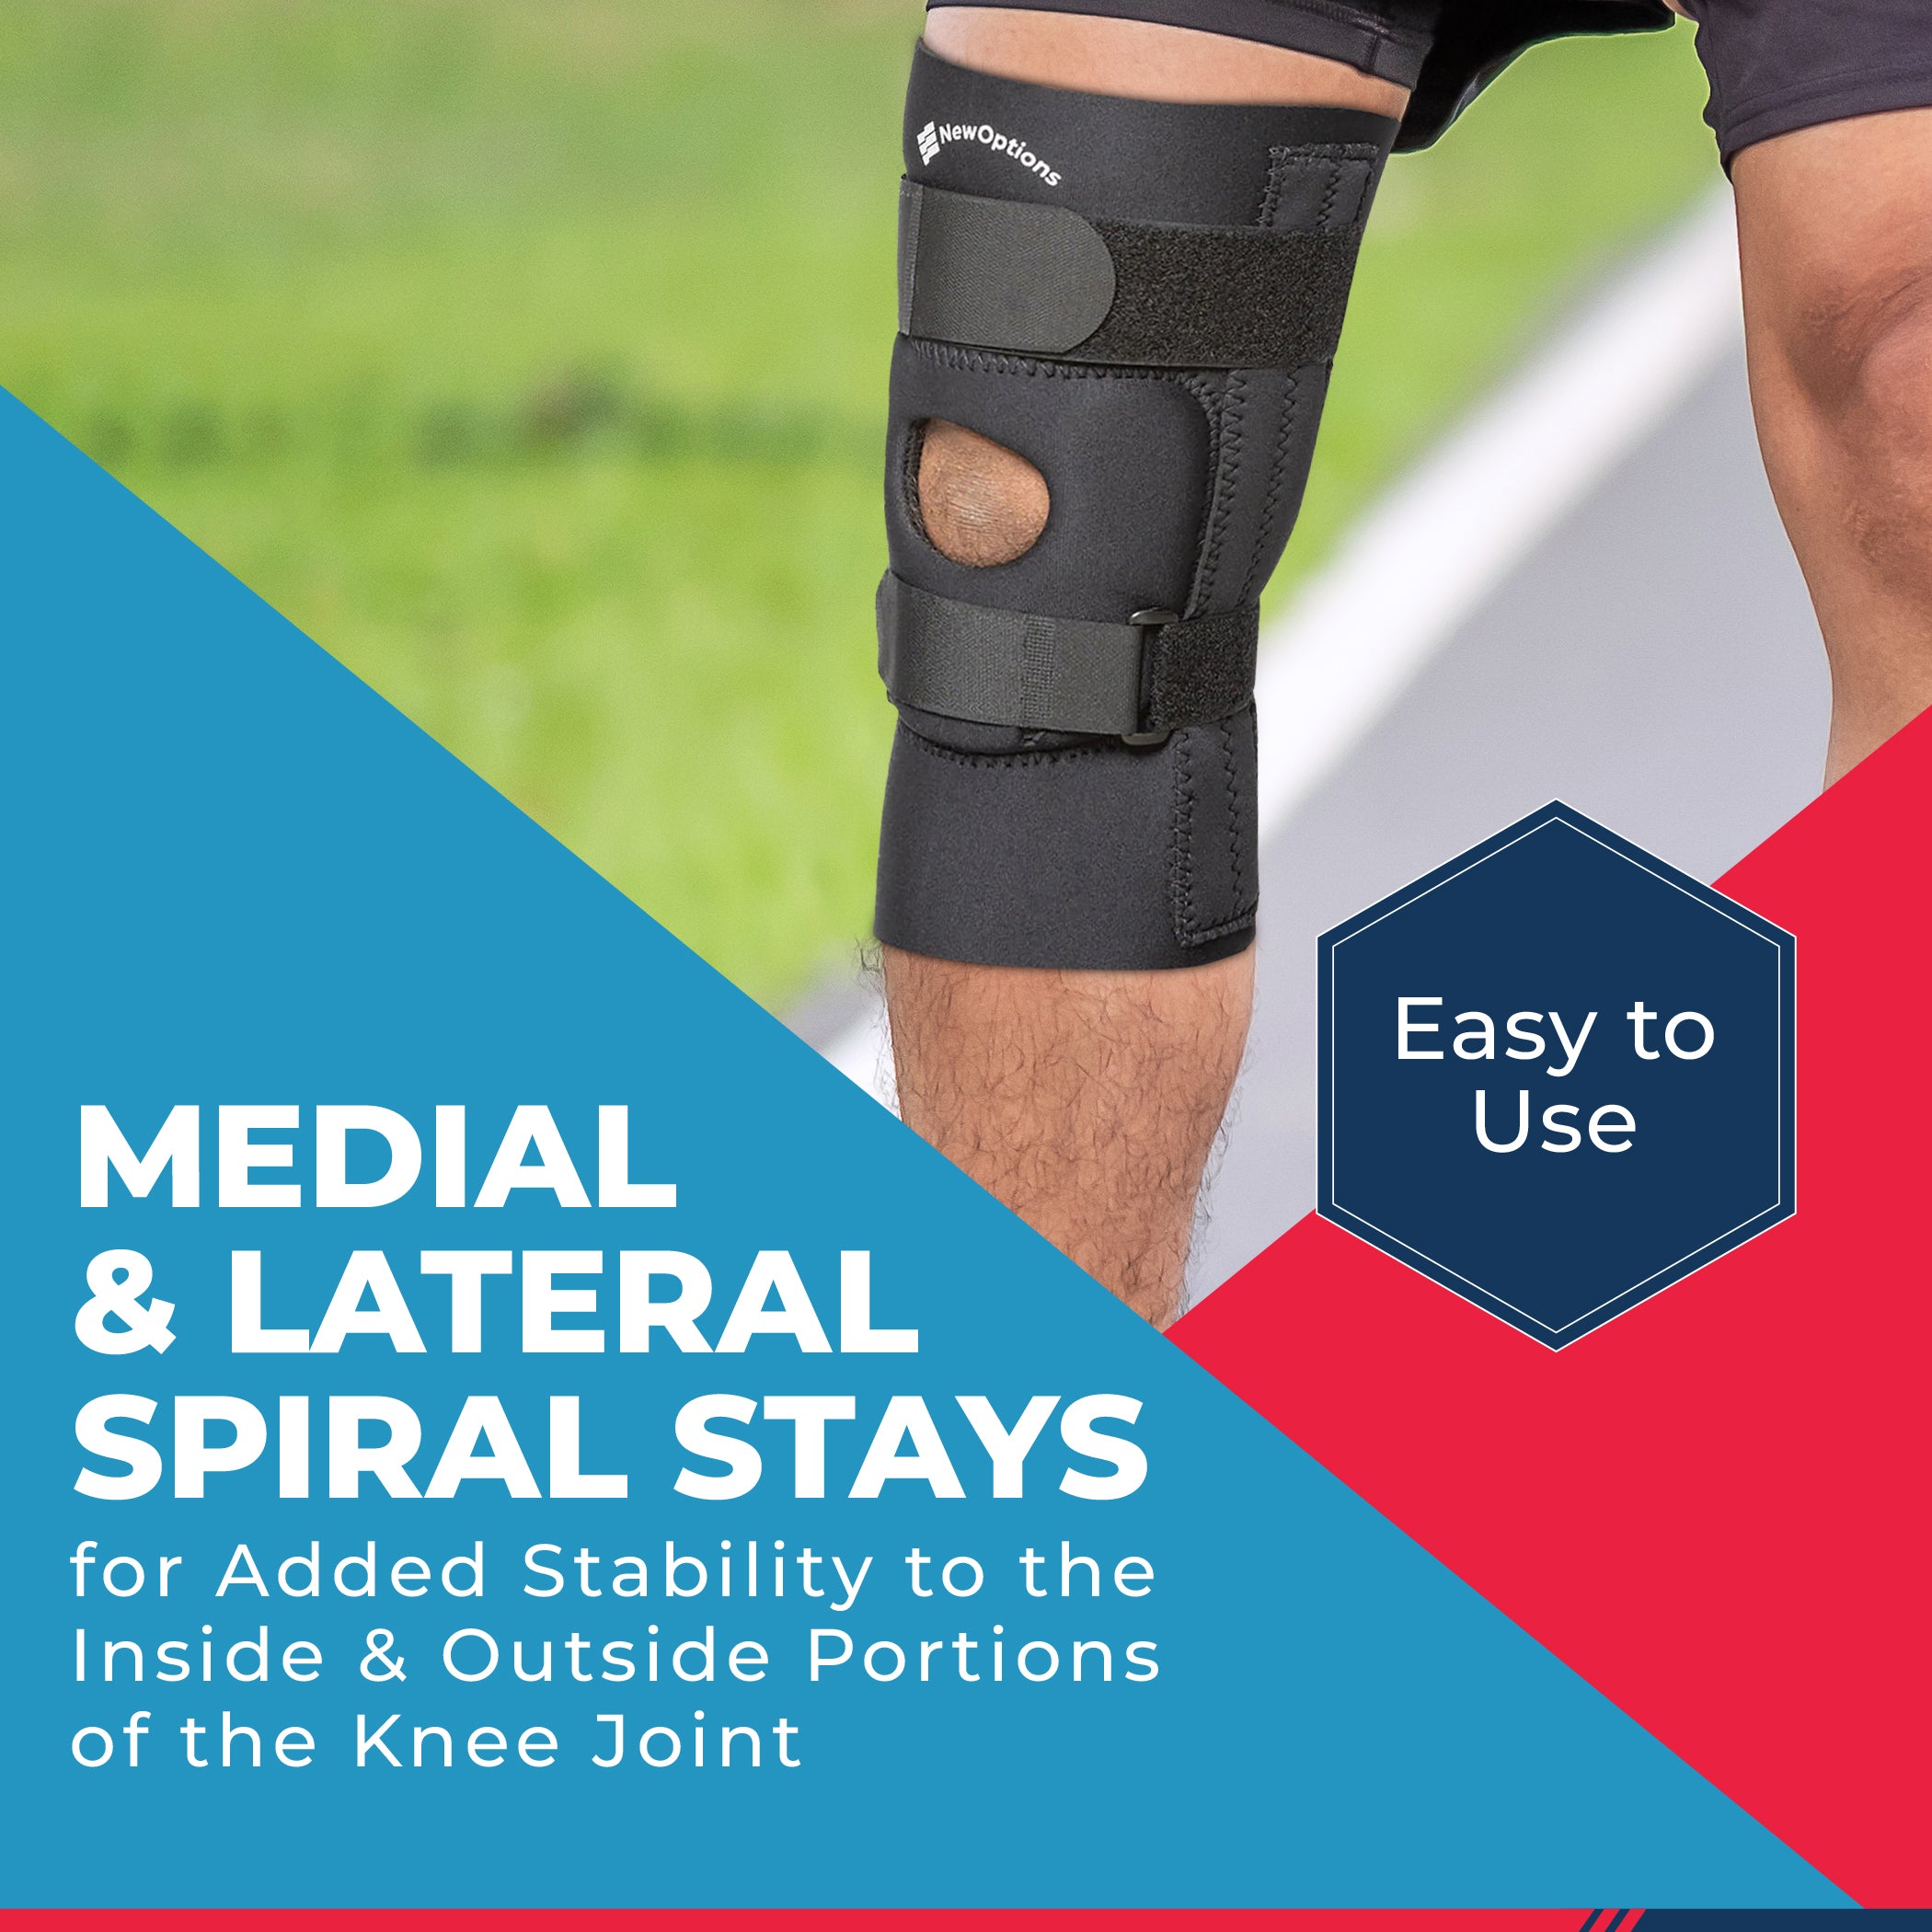 Neoprene Pull On Patella Knee Sleeve with Positive Control Distal